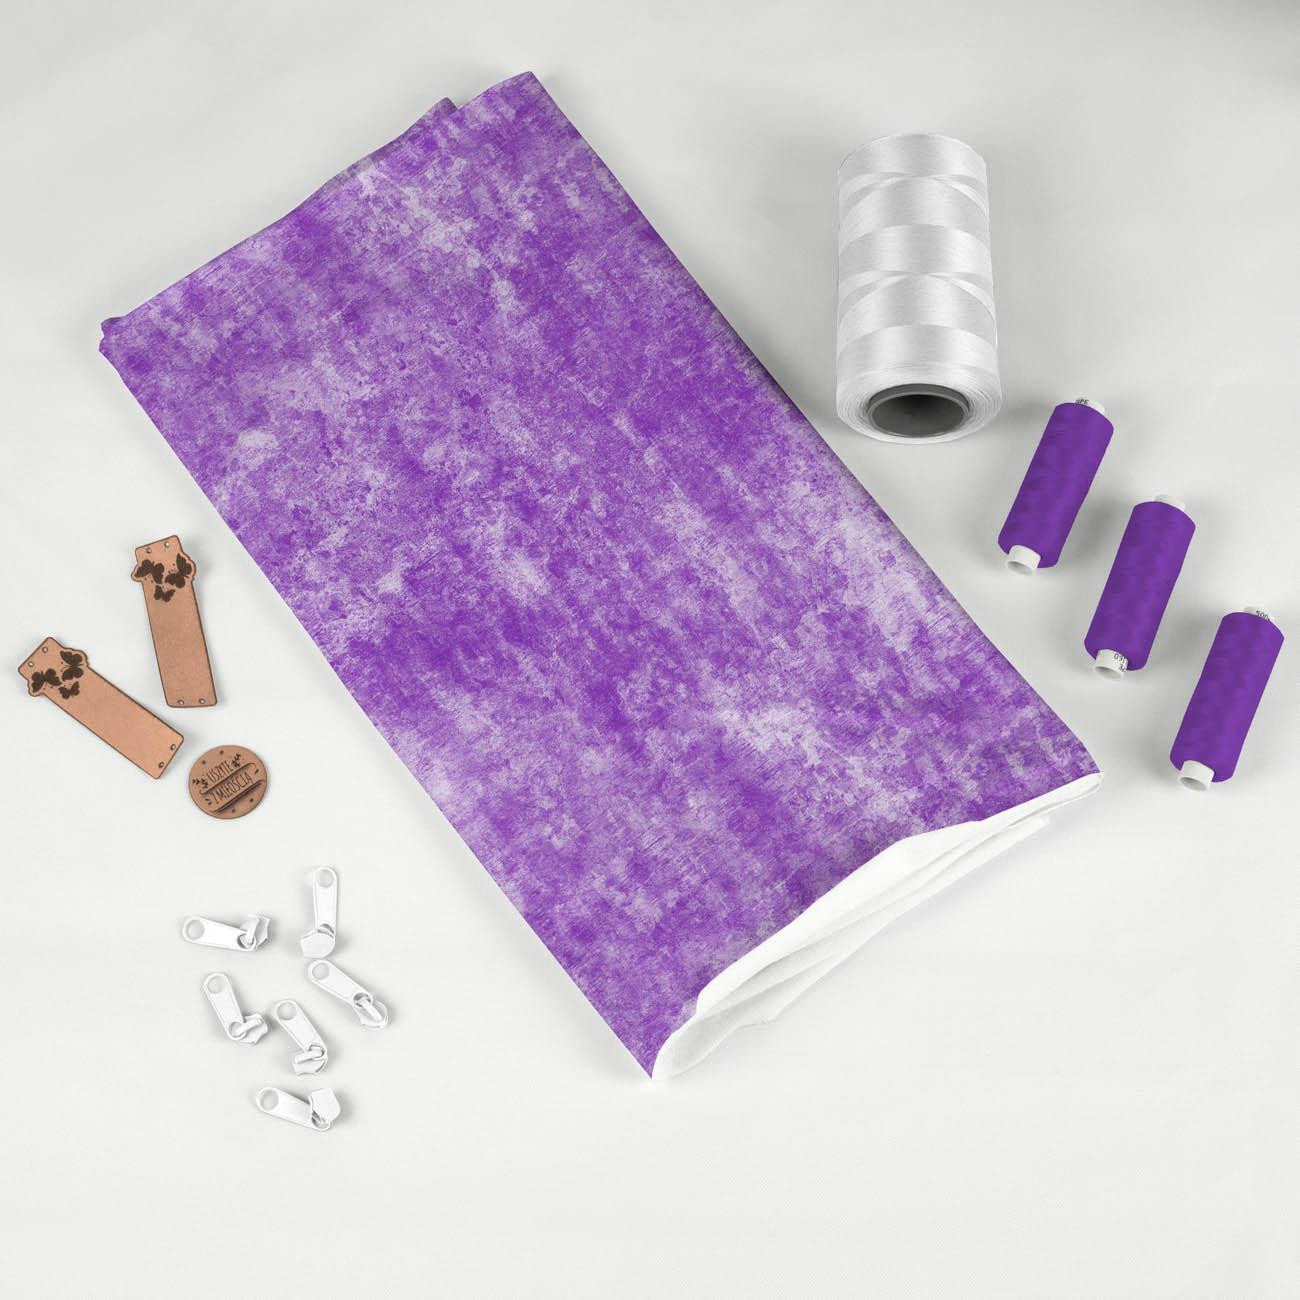 GRUNGE (purple) - single jersey with elastane 